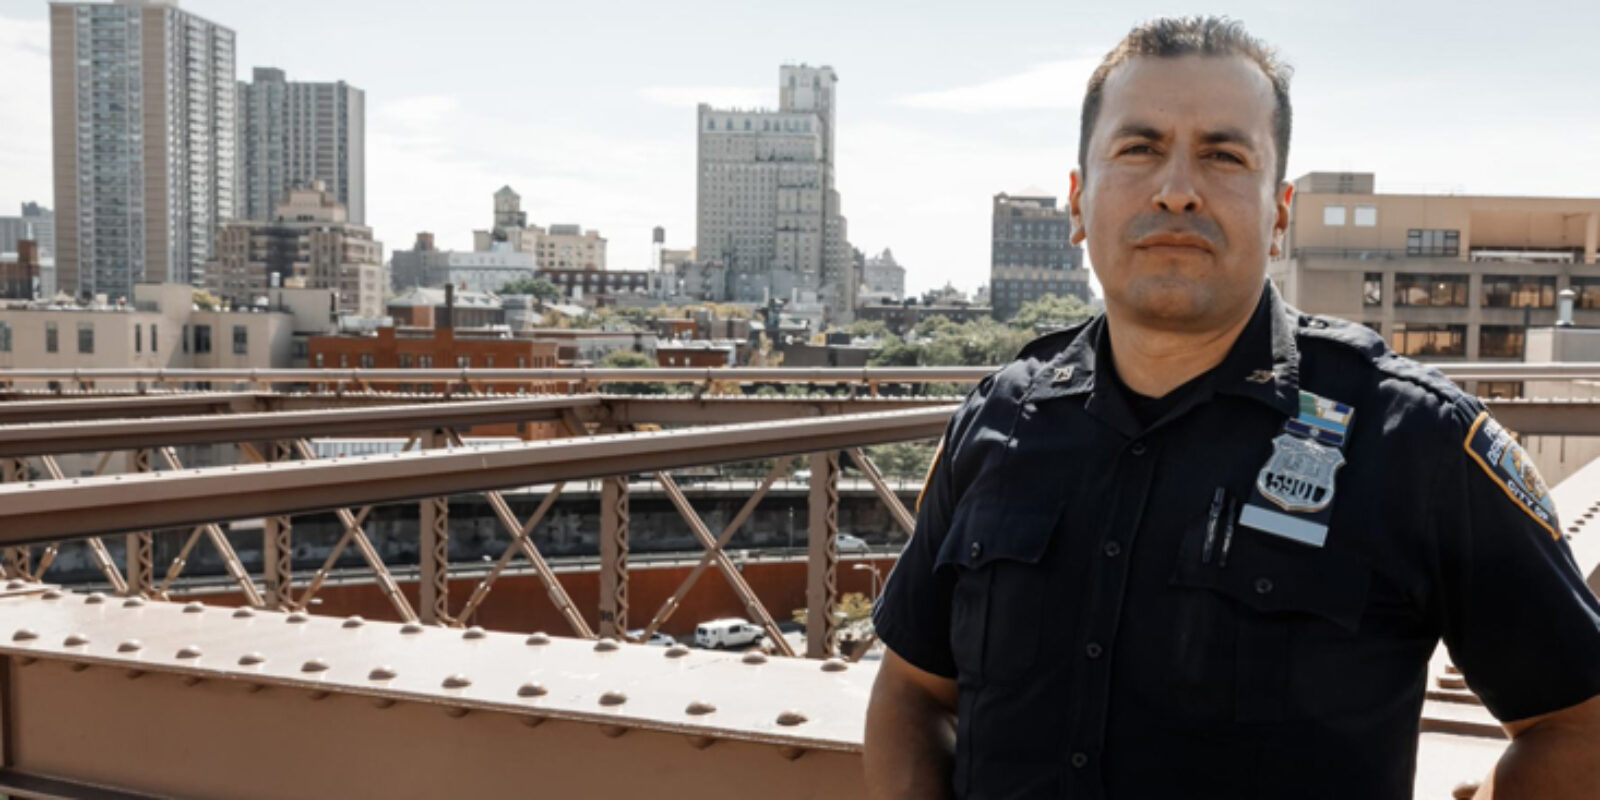 police officer leaning on bridge